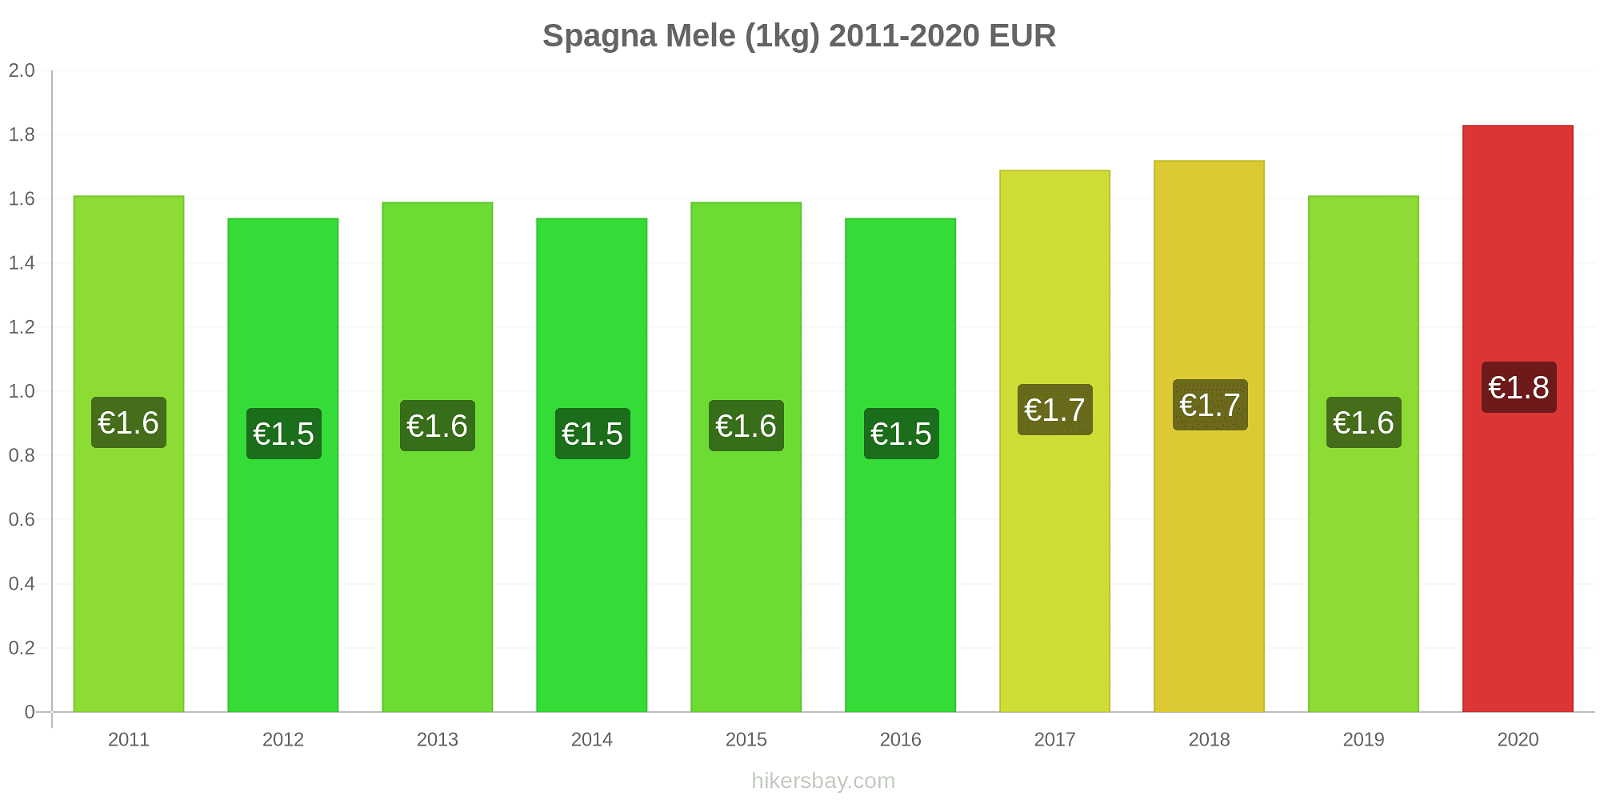 Spagna variazioni di prezzo Mele (1kg) hikersbay.com